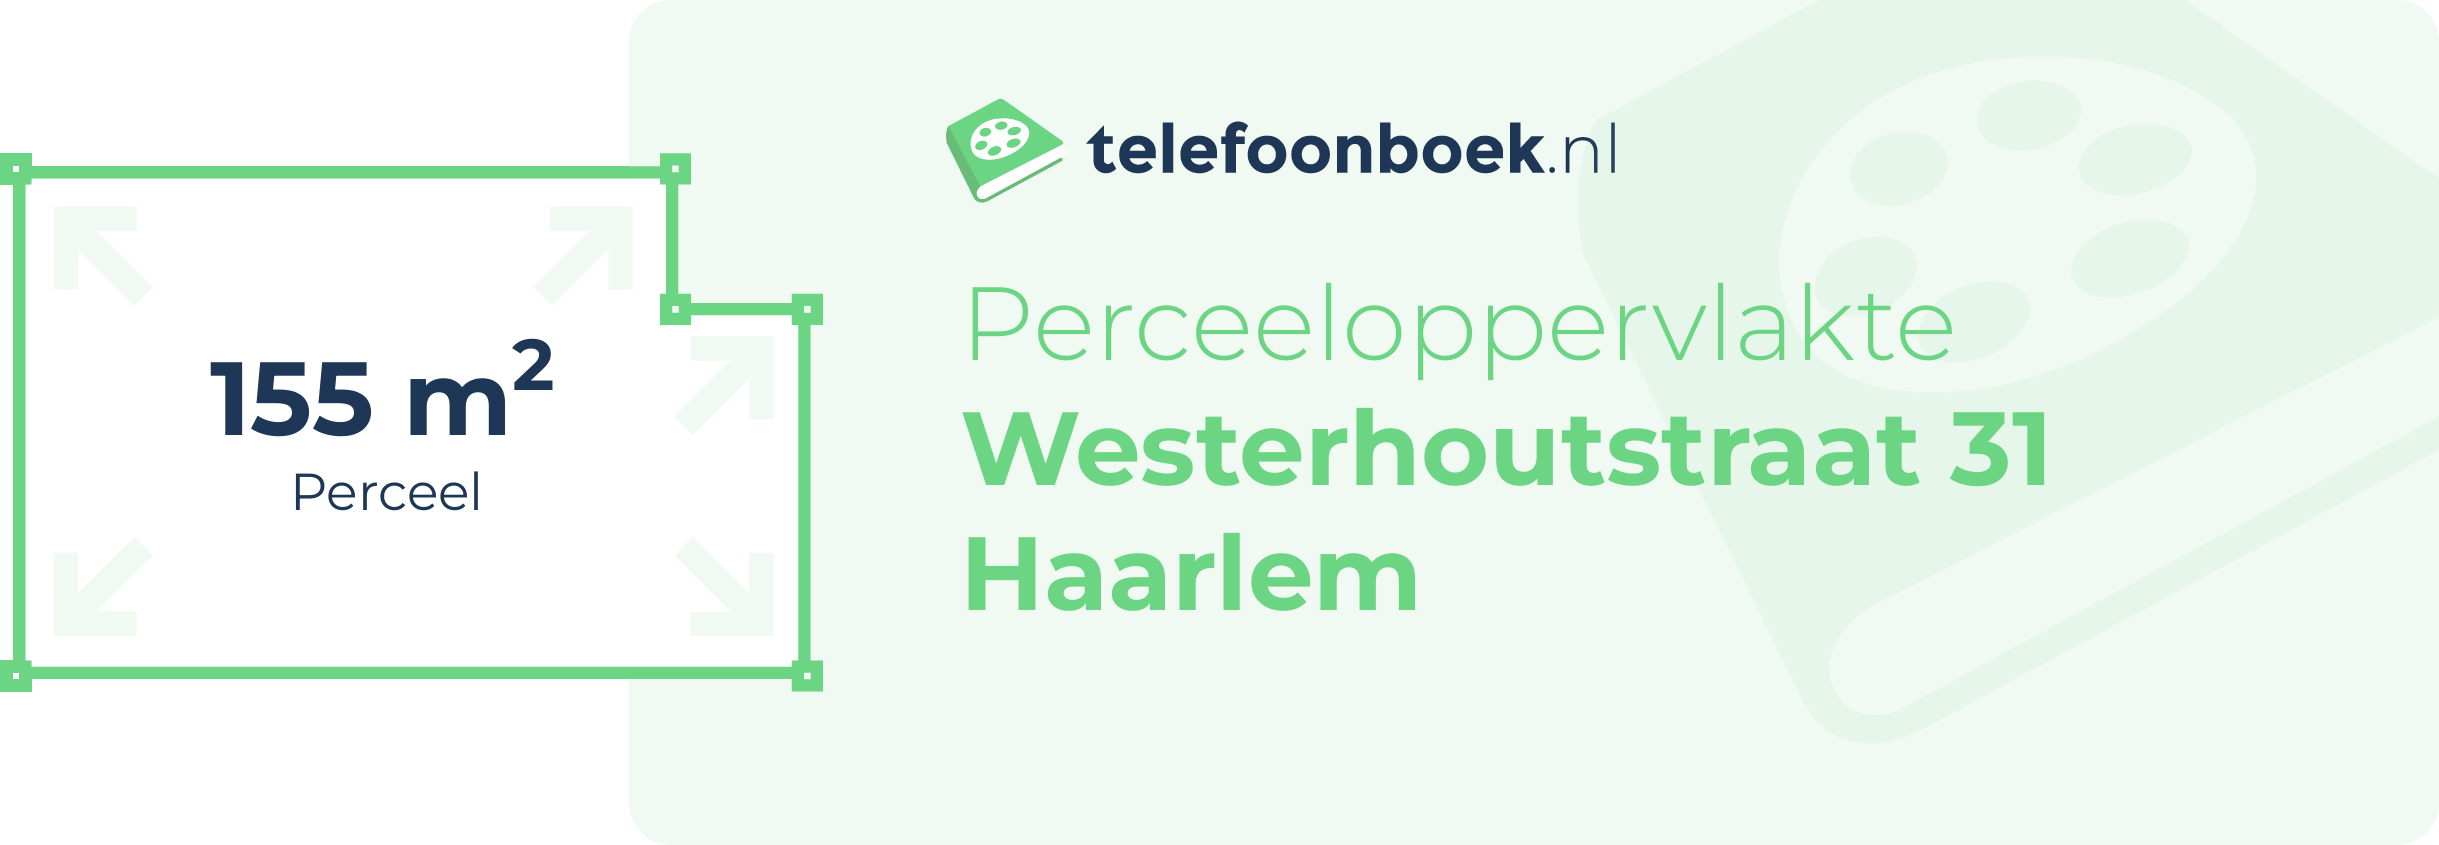 Perceeloppervlakte Westerhoutstraat 31 Haarlem